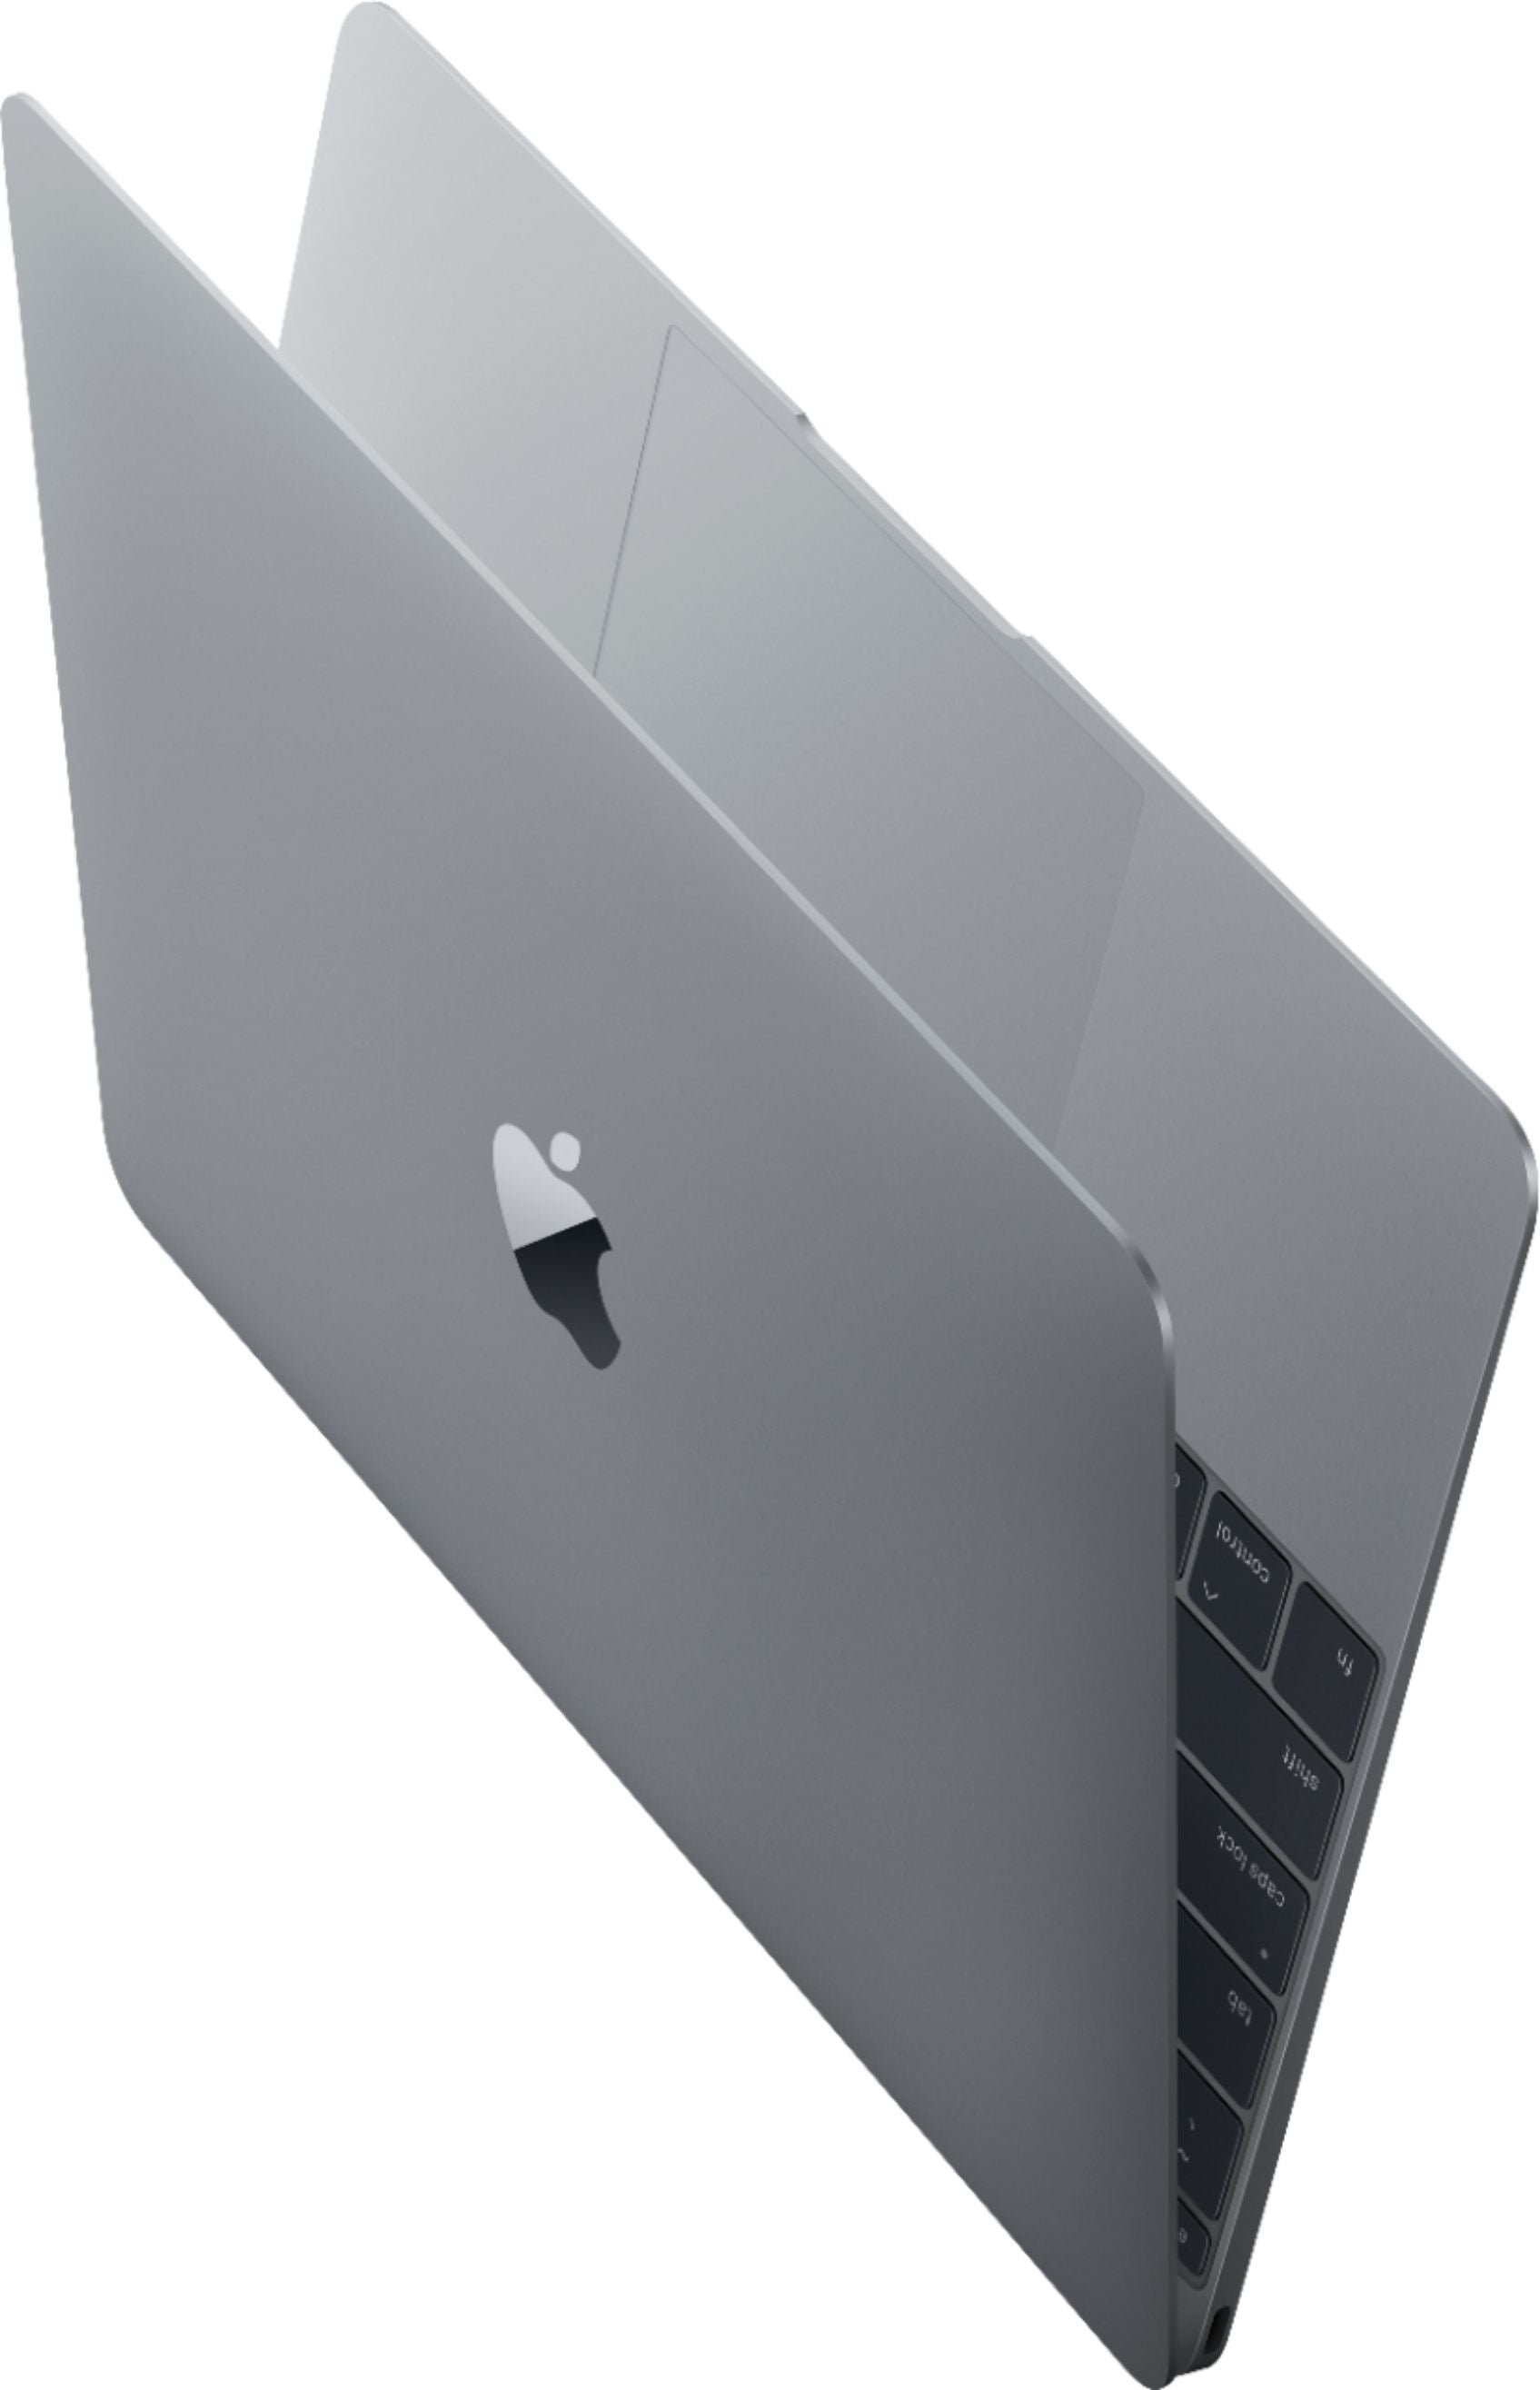 Apple MacBook Core Intel Core m7 1.2 GHZ 12” (Early 2016) SSD 512GB (Space Gray)